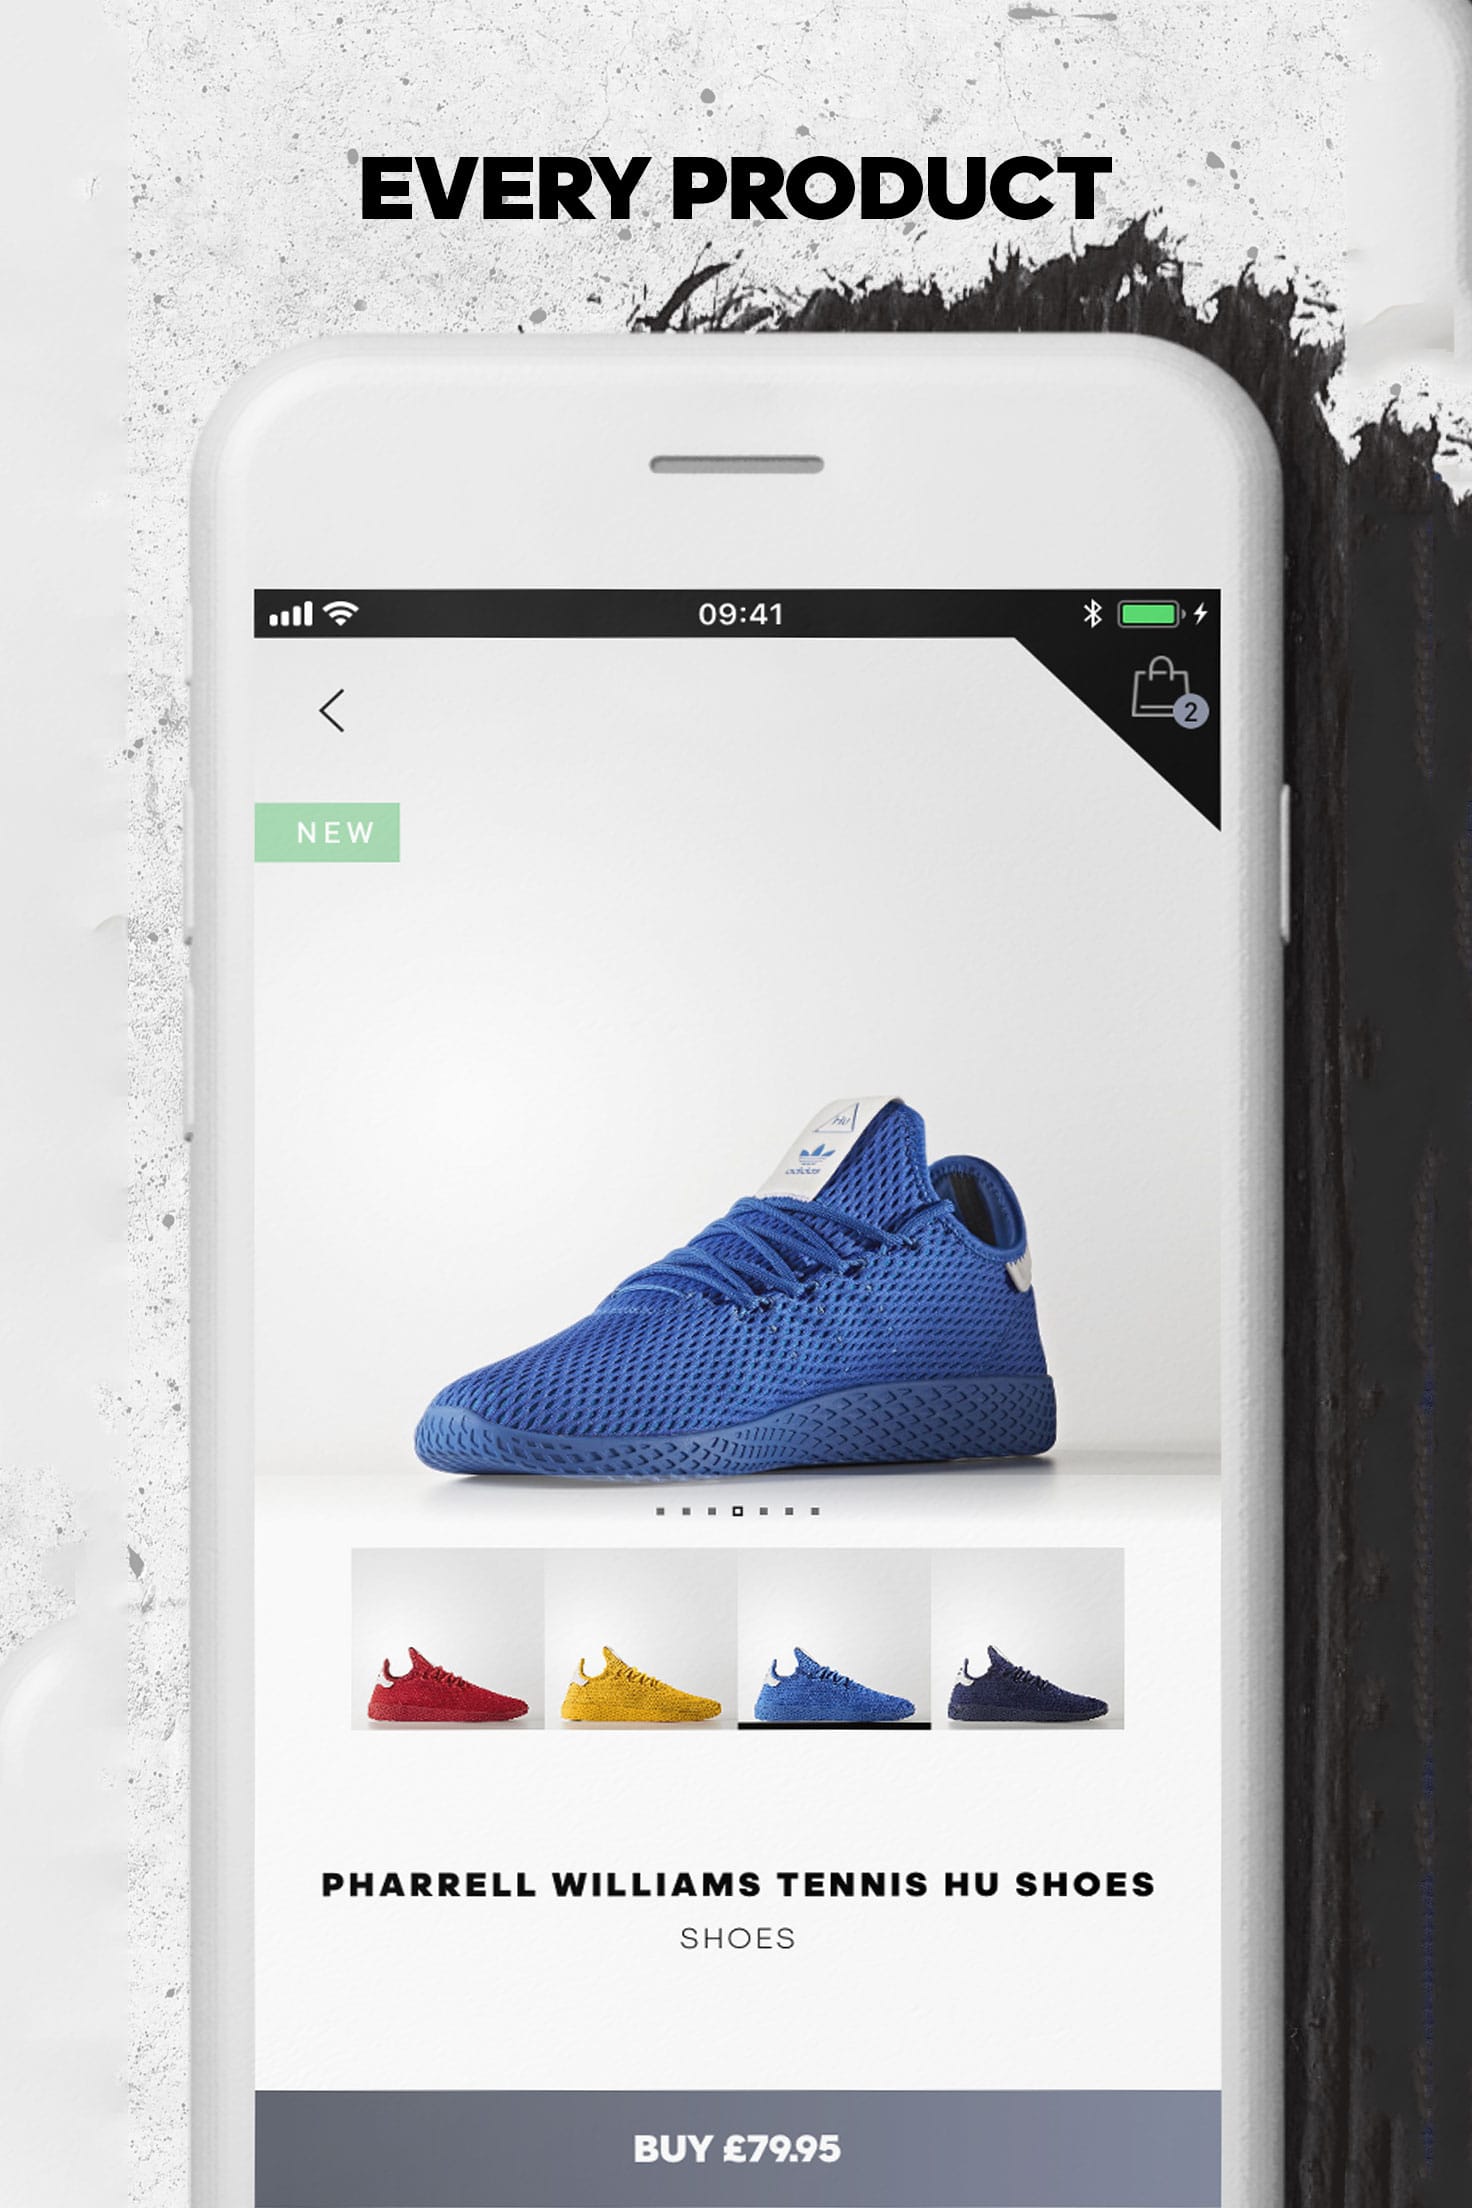 adidas new app